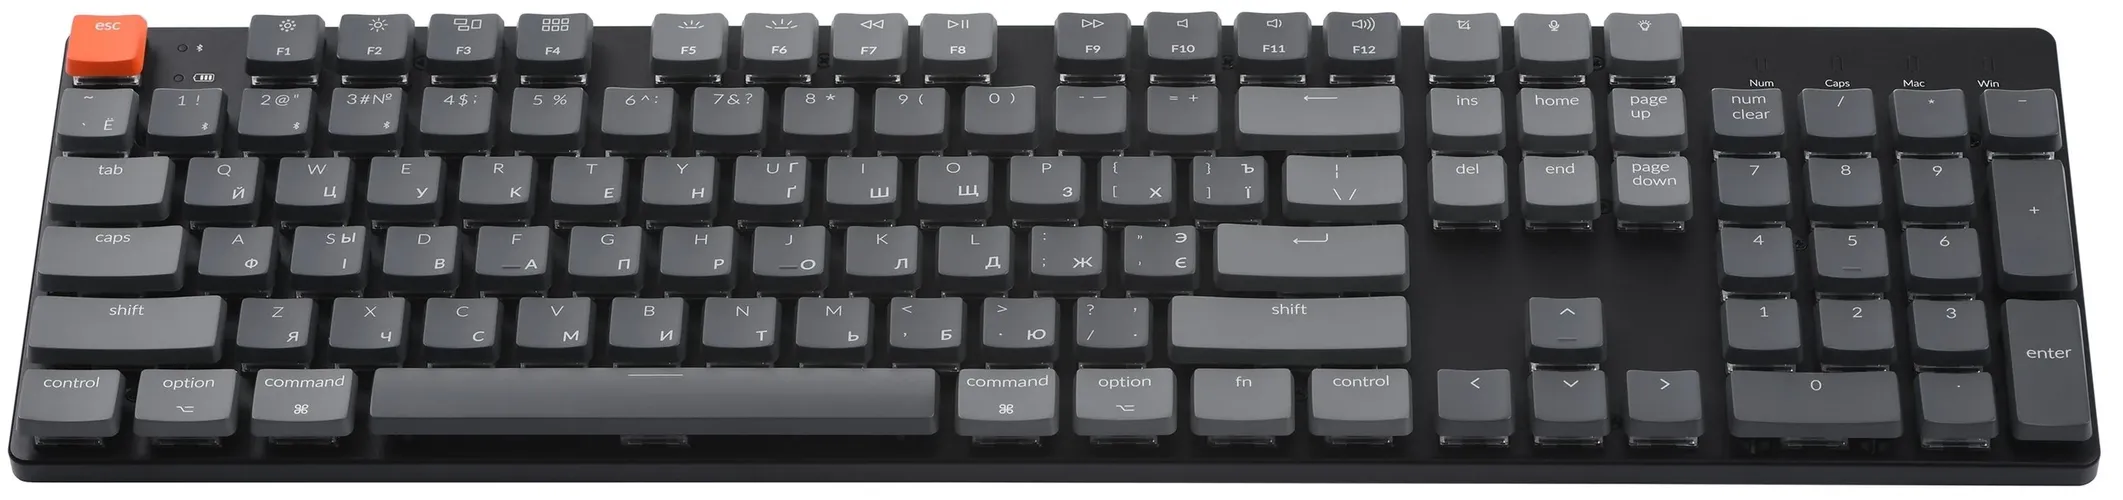 Клавиатура Keychron K5 SE Banana White Led, купить недорого